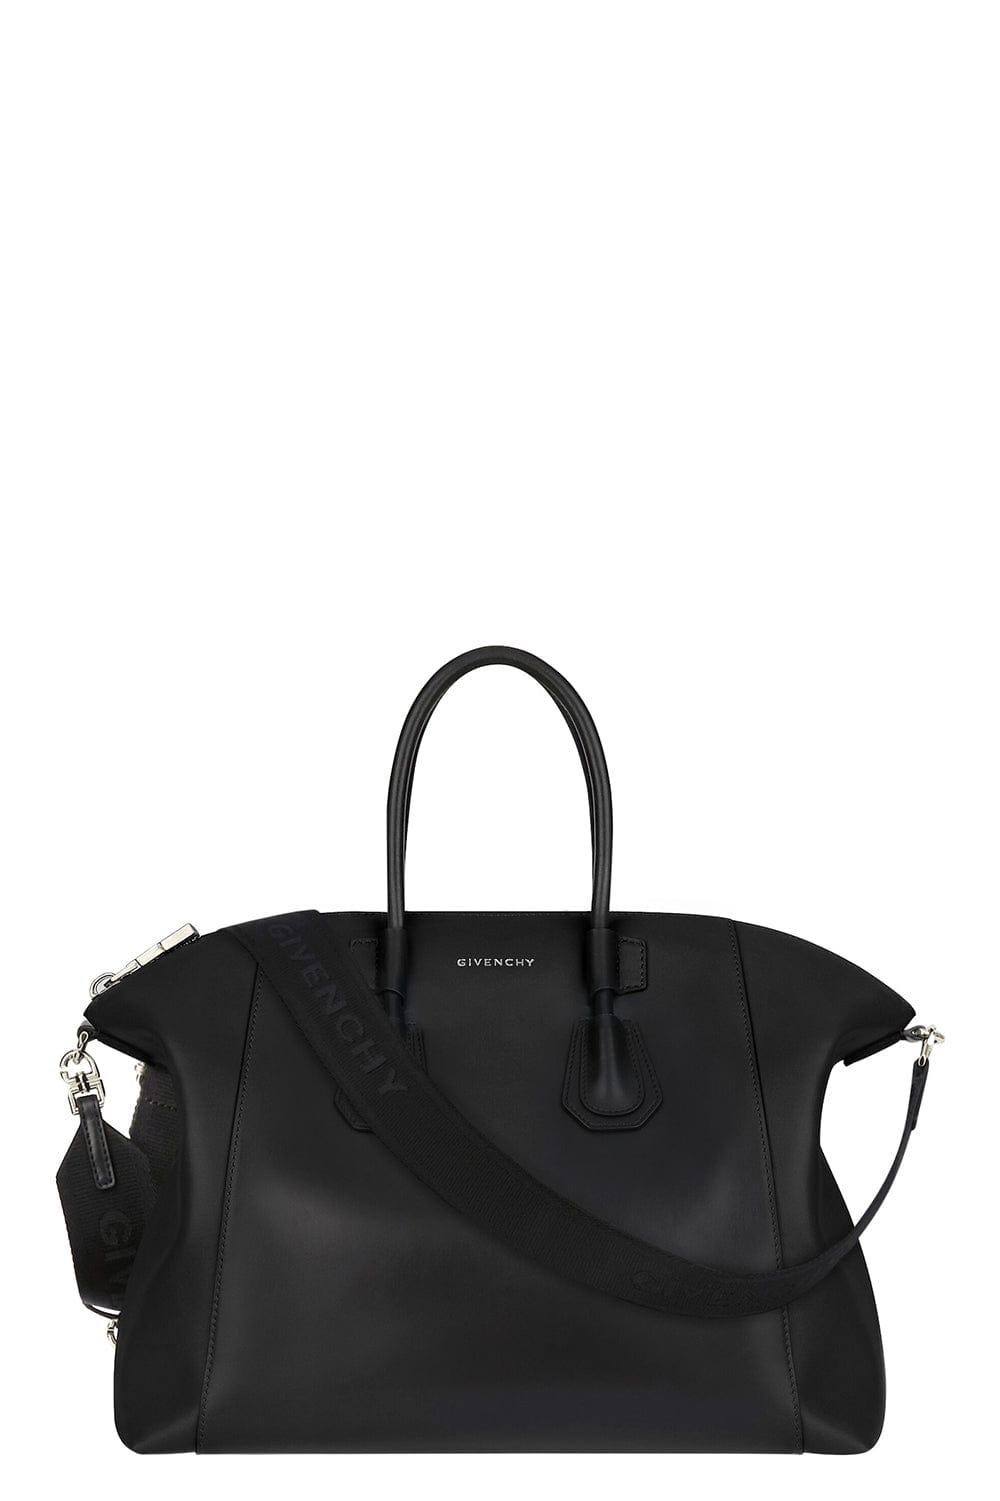 Givenchy Small Antigona Sport Handbag in Black | Lyst